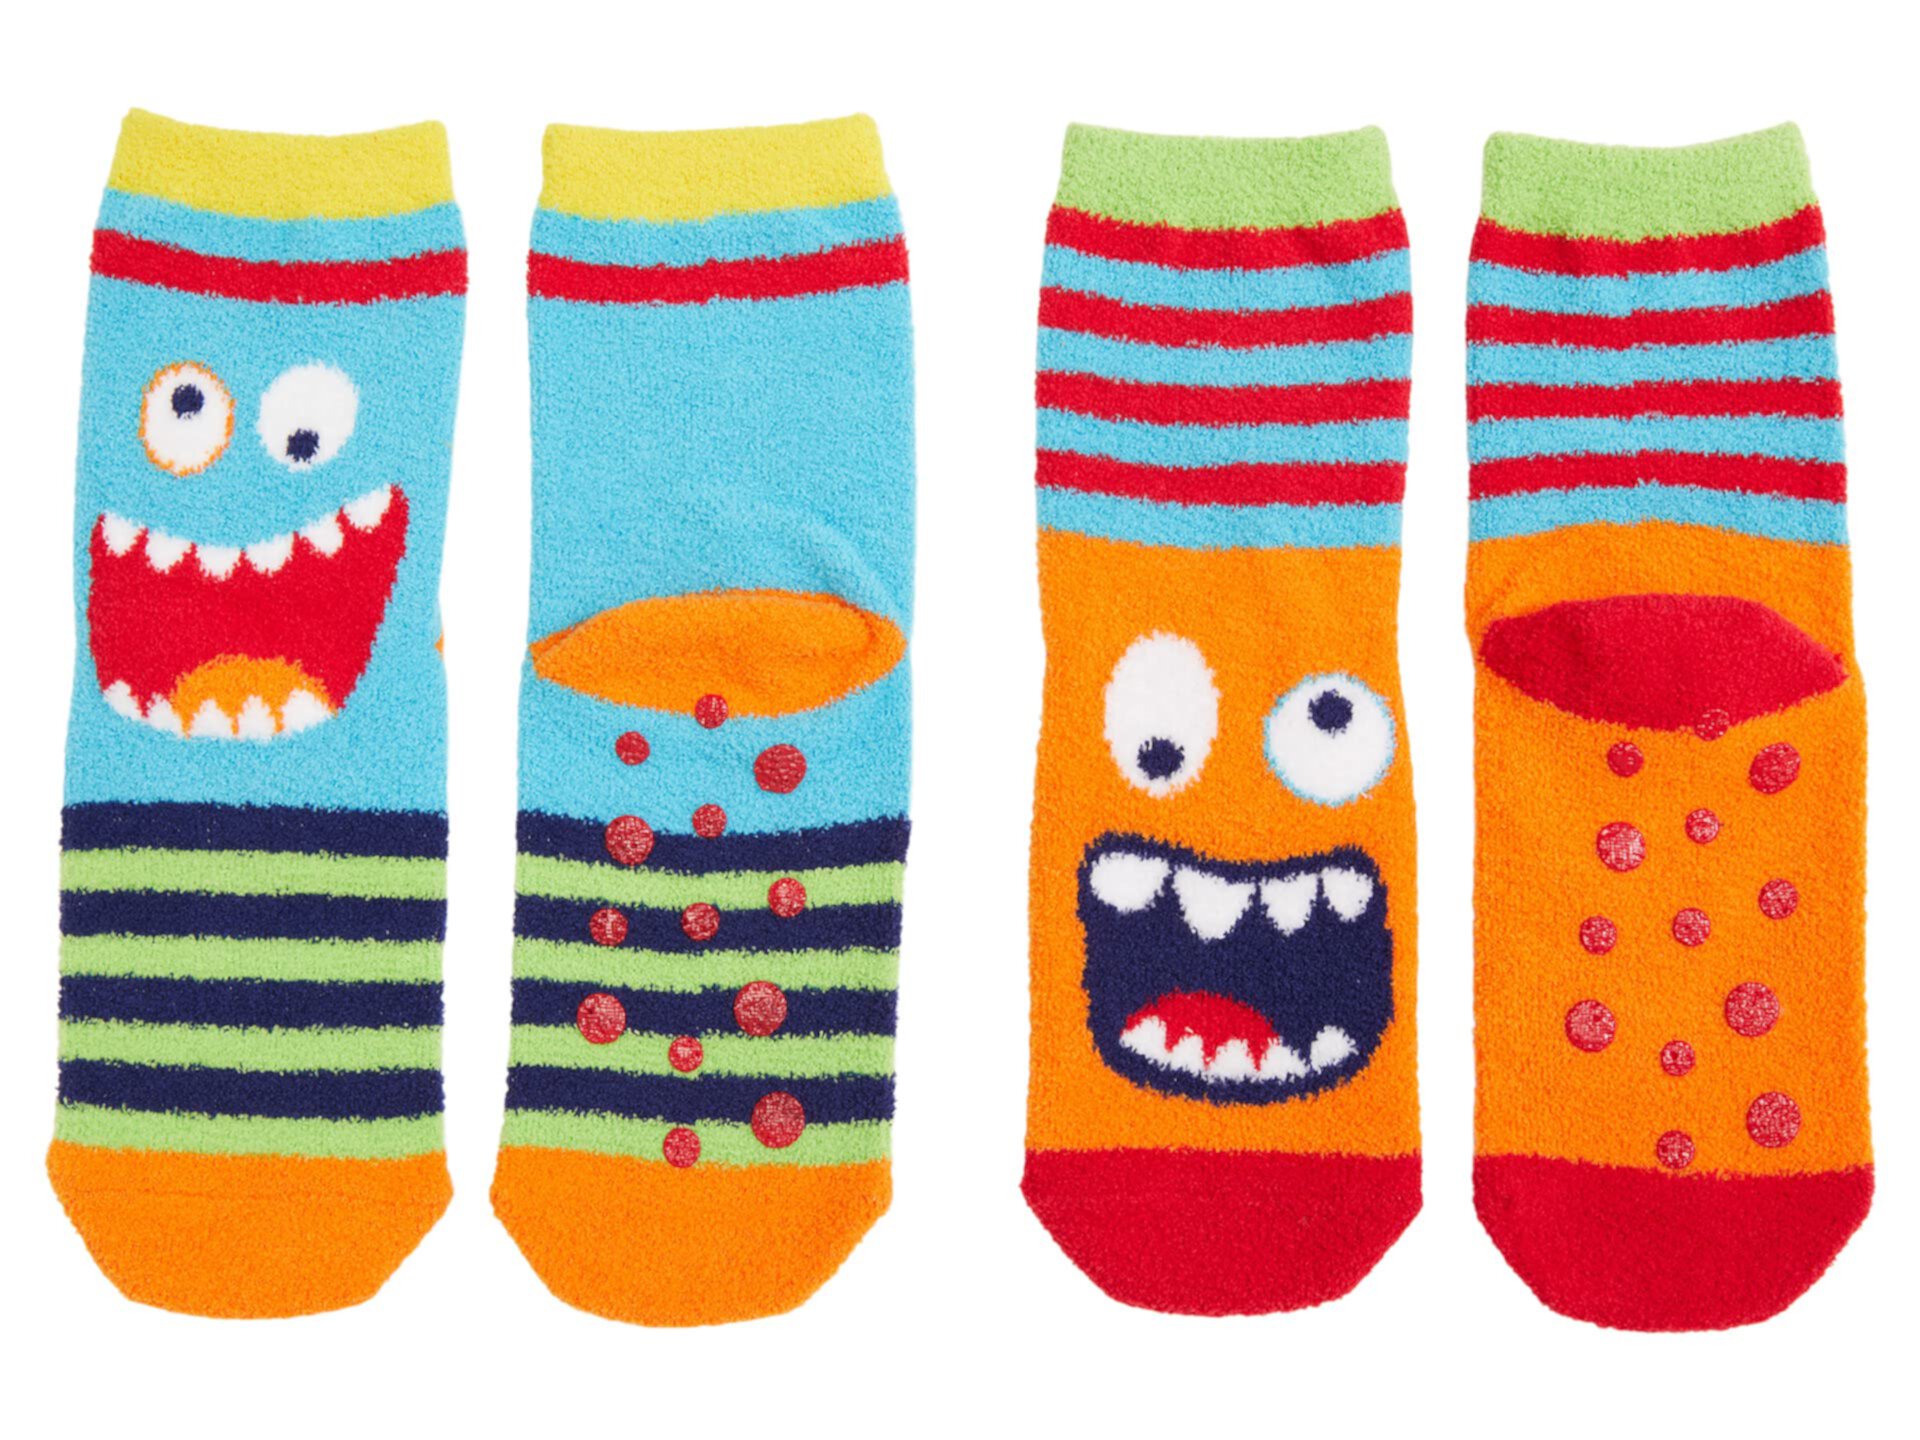 Набор из 2 пар носков Monster Slipper (для младенцев / малышей / маленьких детей) Jefferies Socks